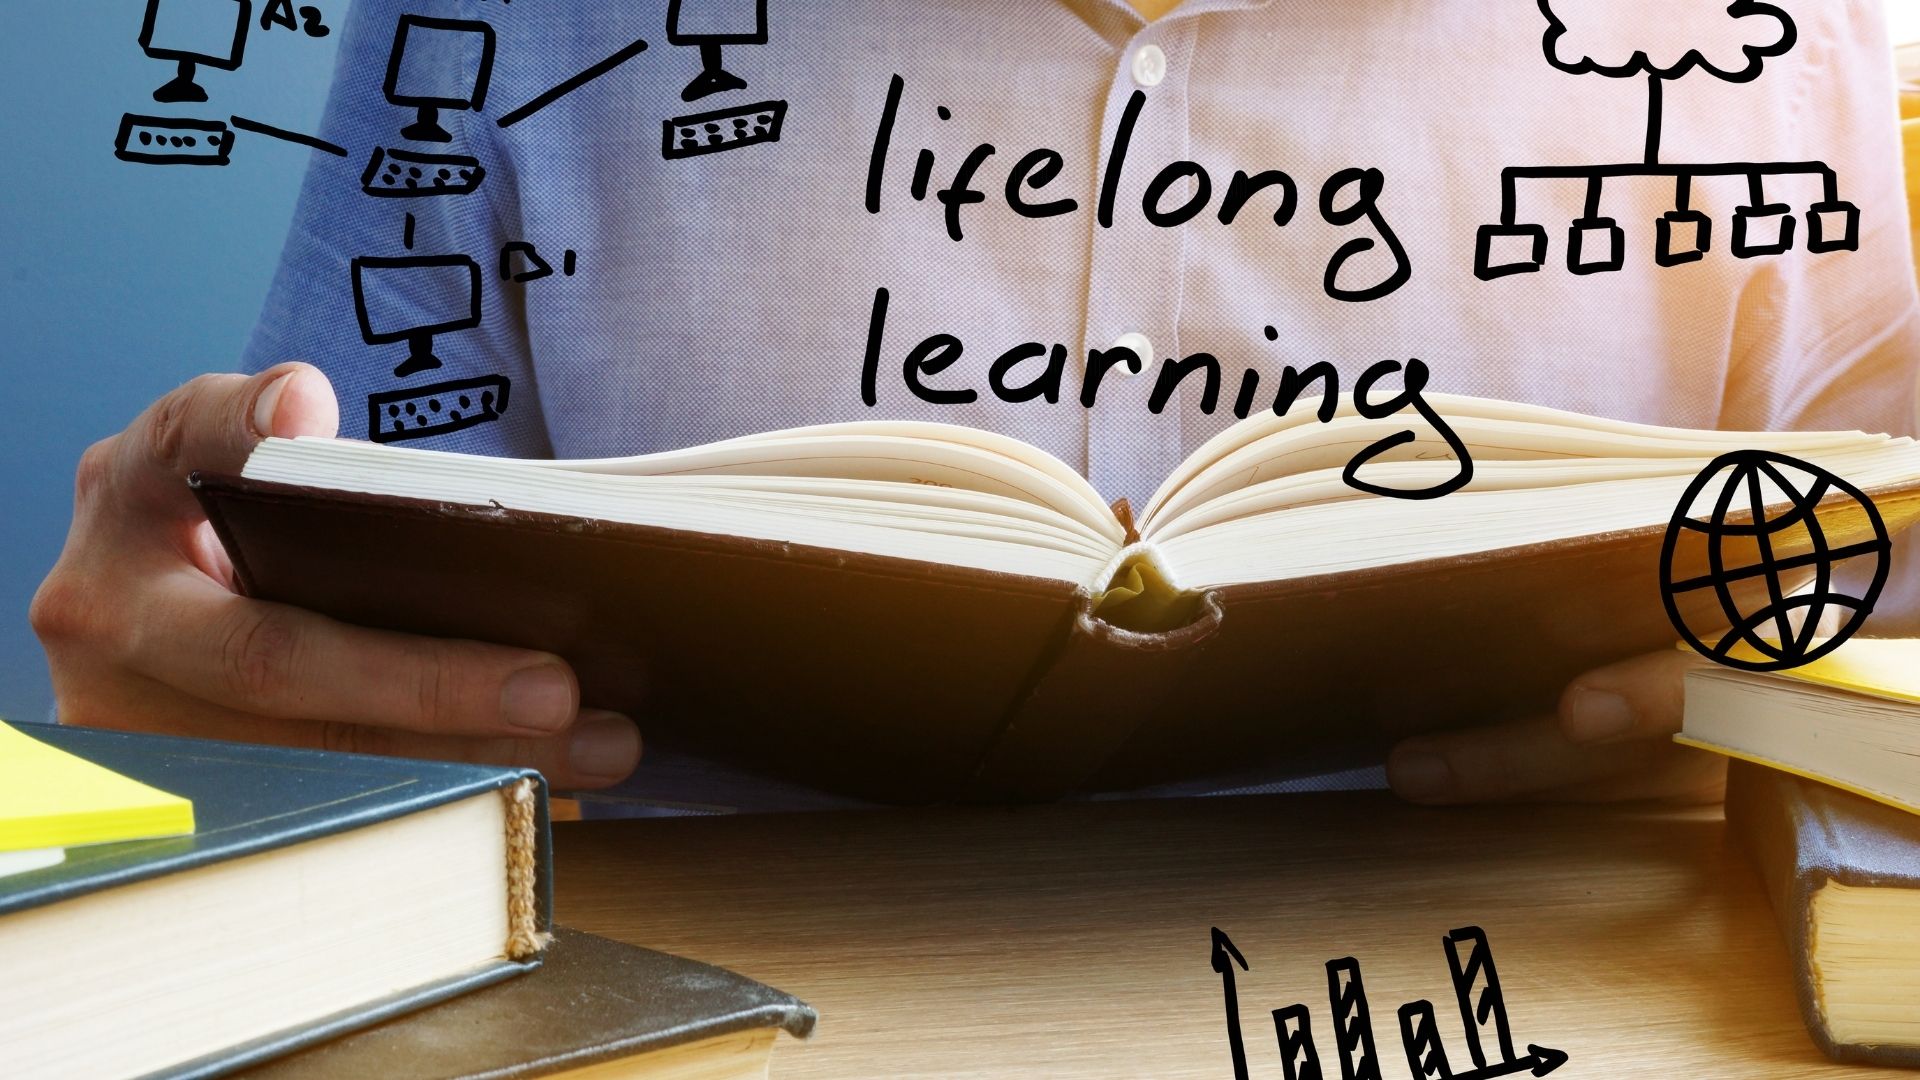 metode lifelong learning. dok: canva.com